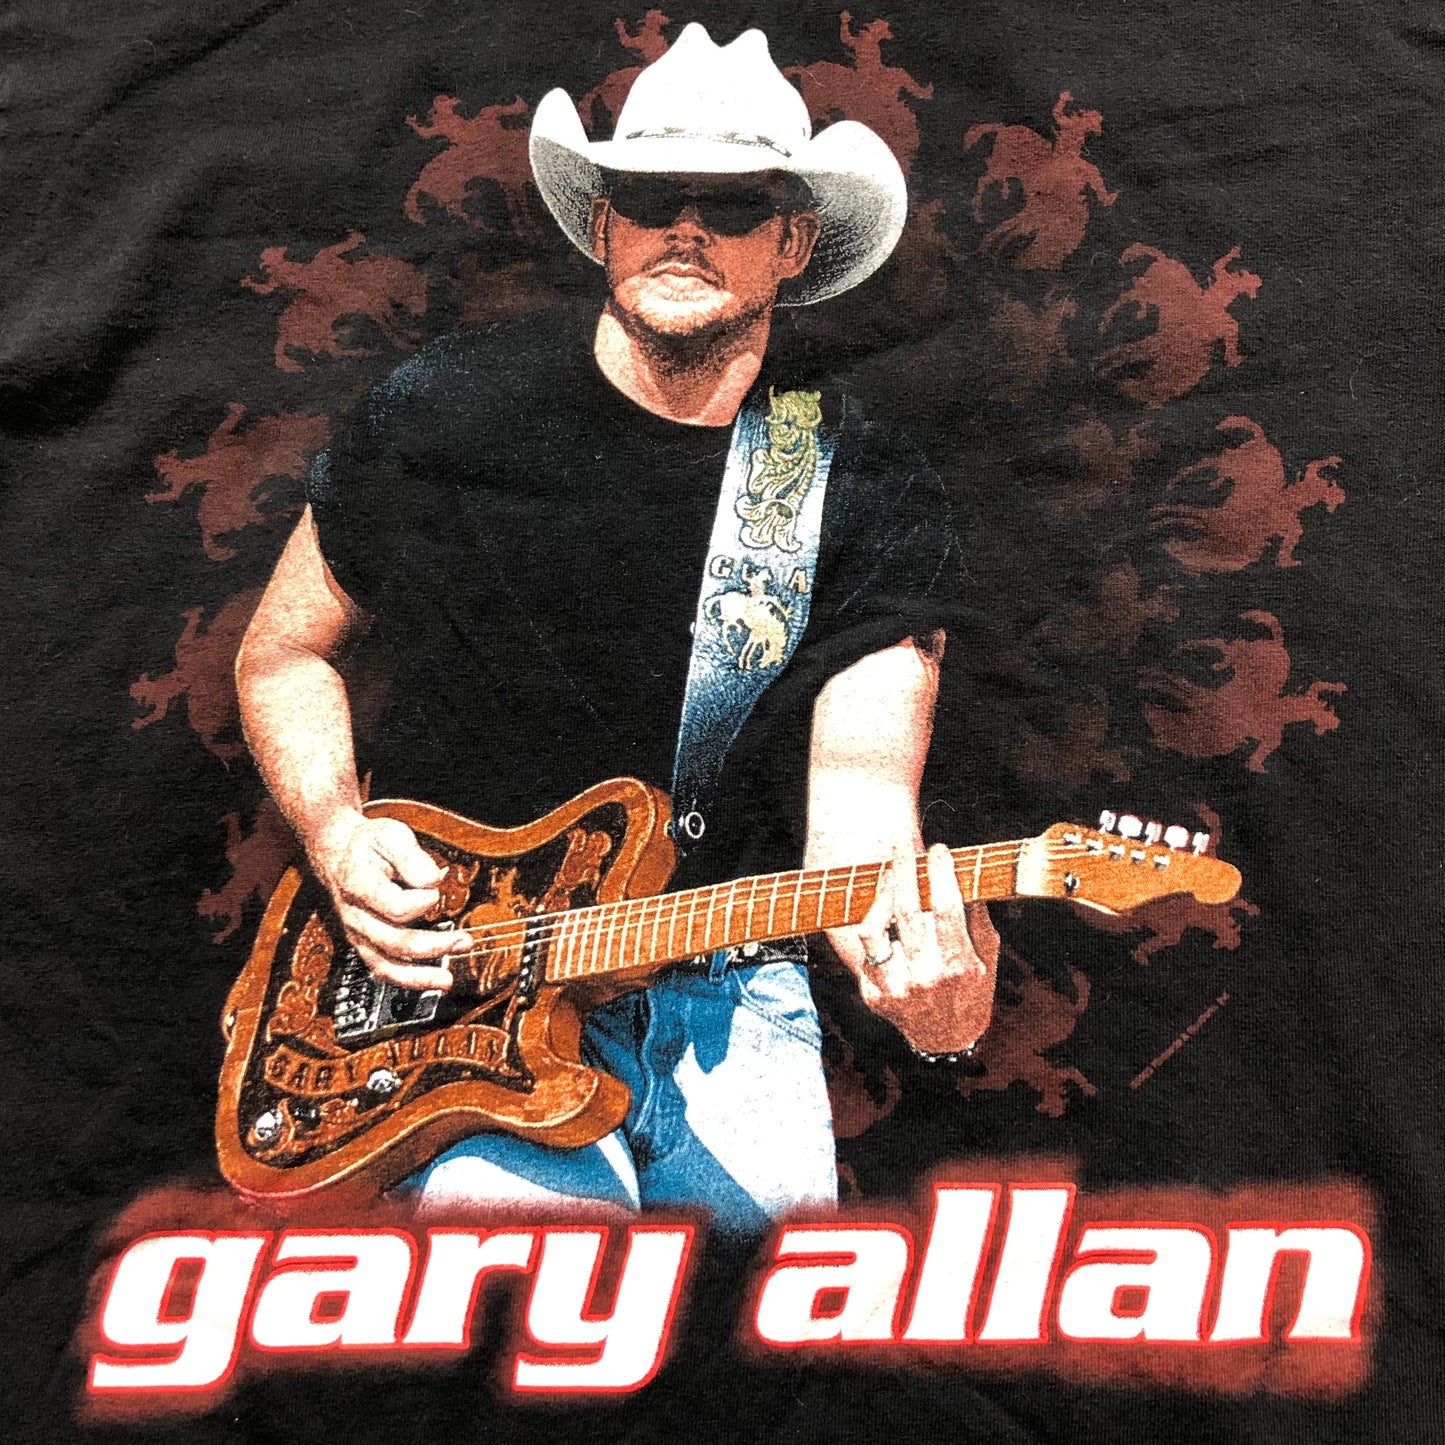 2001 Vintage Western Gary Allan “Man To Man” Country Concert T-Shirt